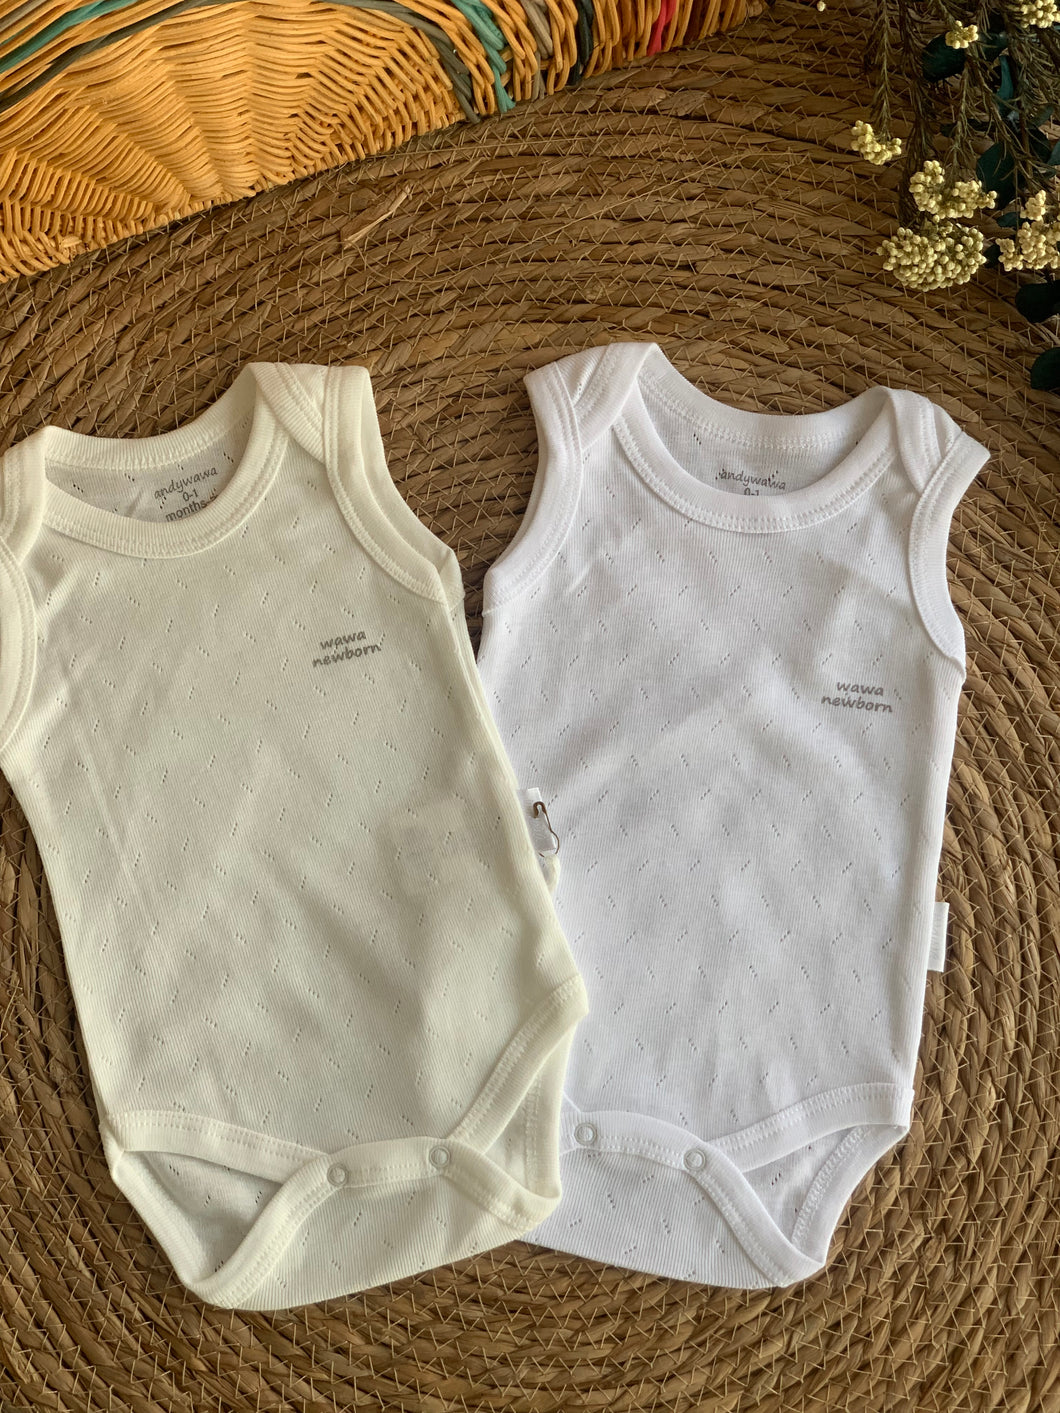 Newborn Set of 2 Bodies-White and Offwhite